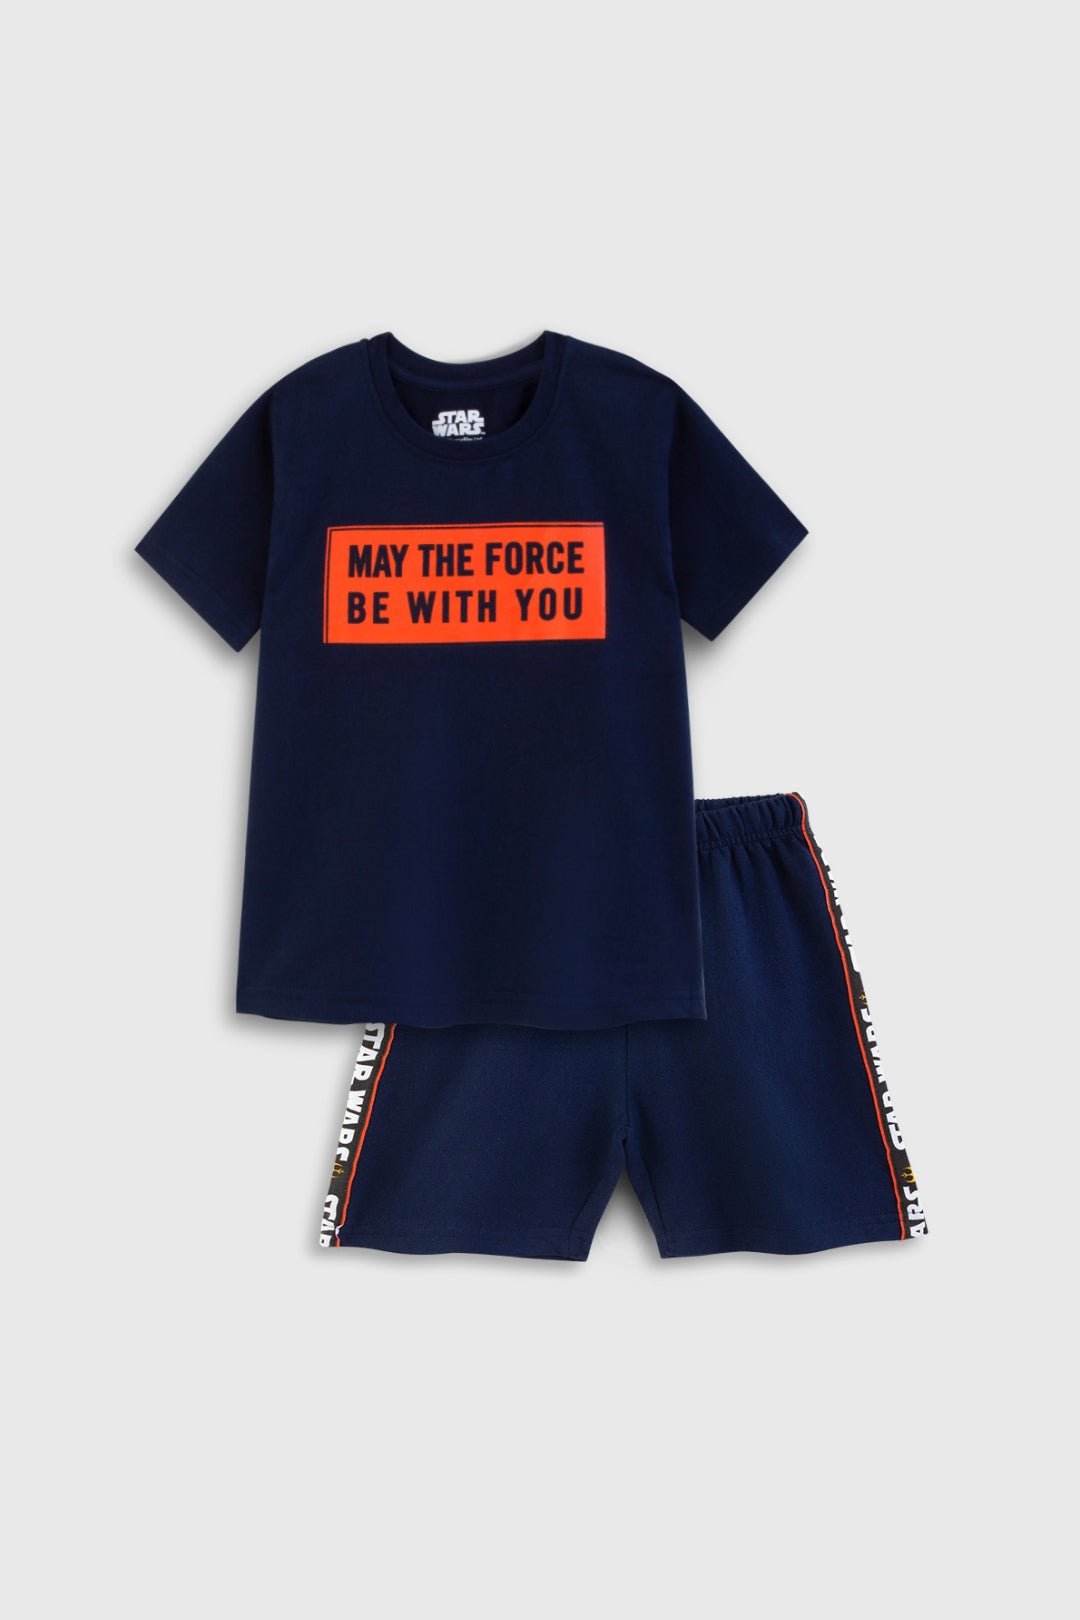 Star wars Iconic Shorts set